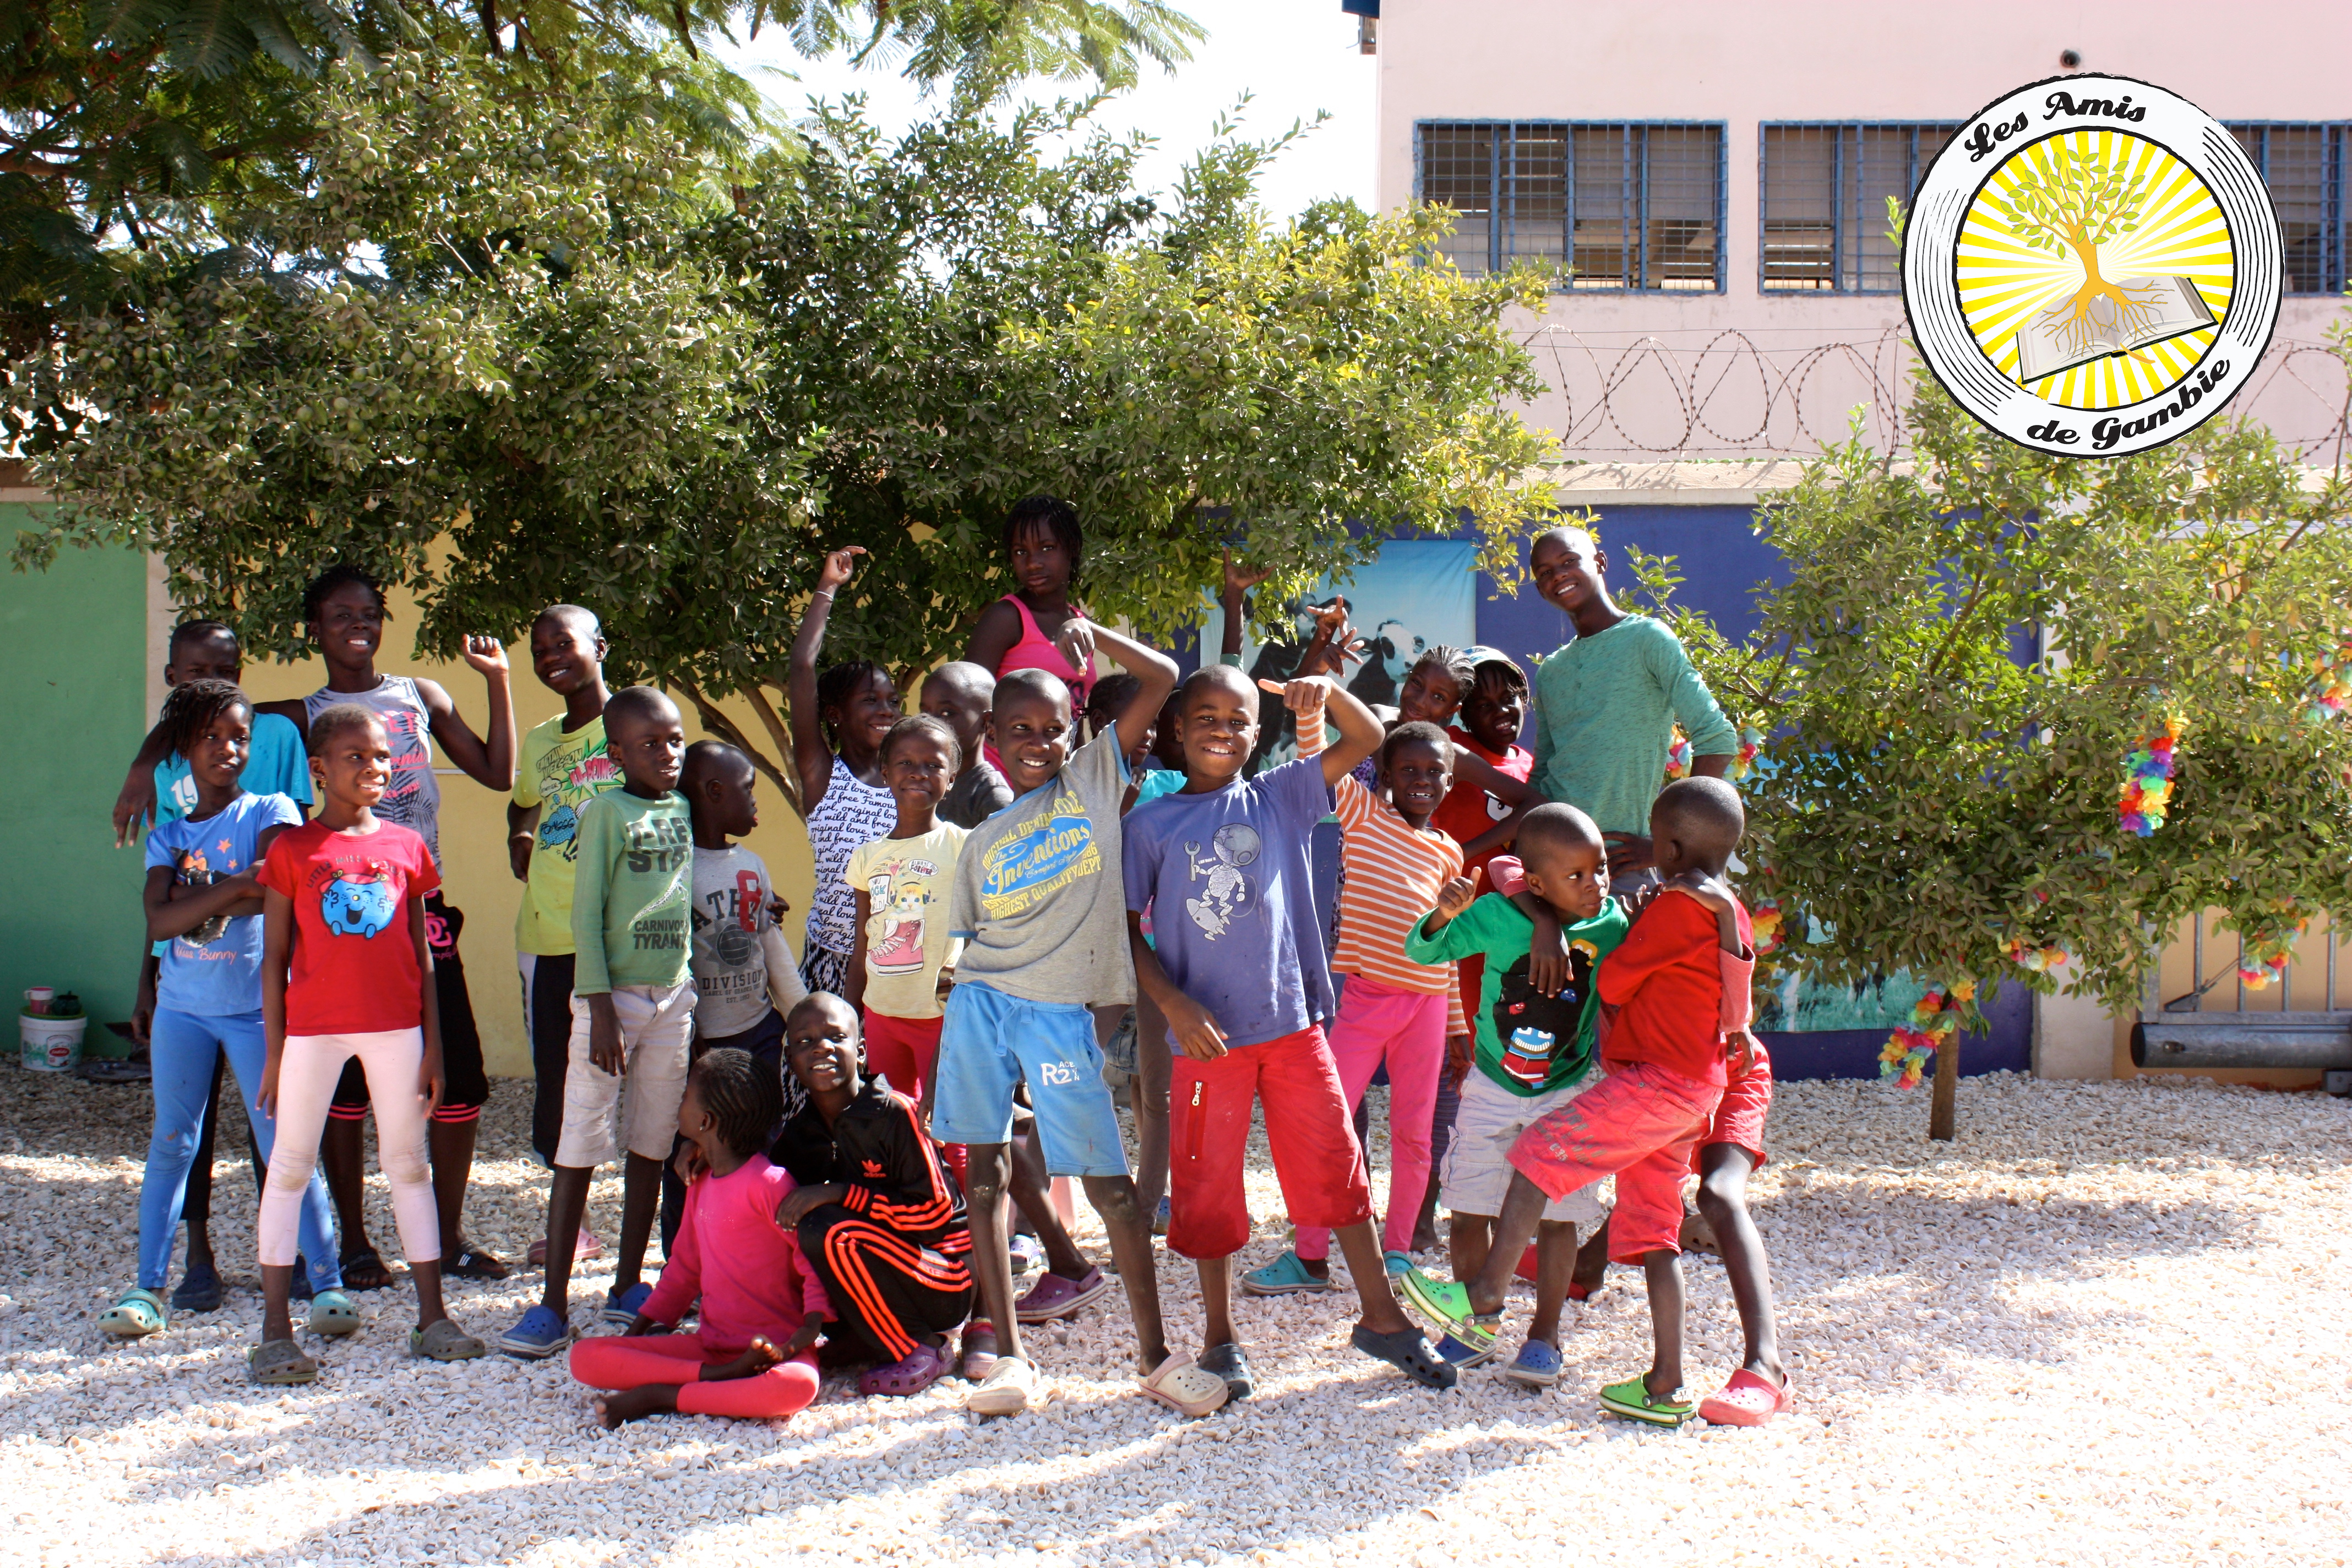 Kindertehuis Les Amis de Gambie